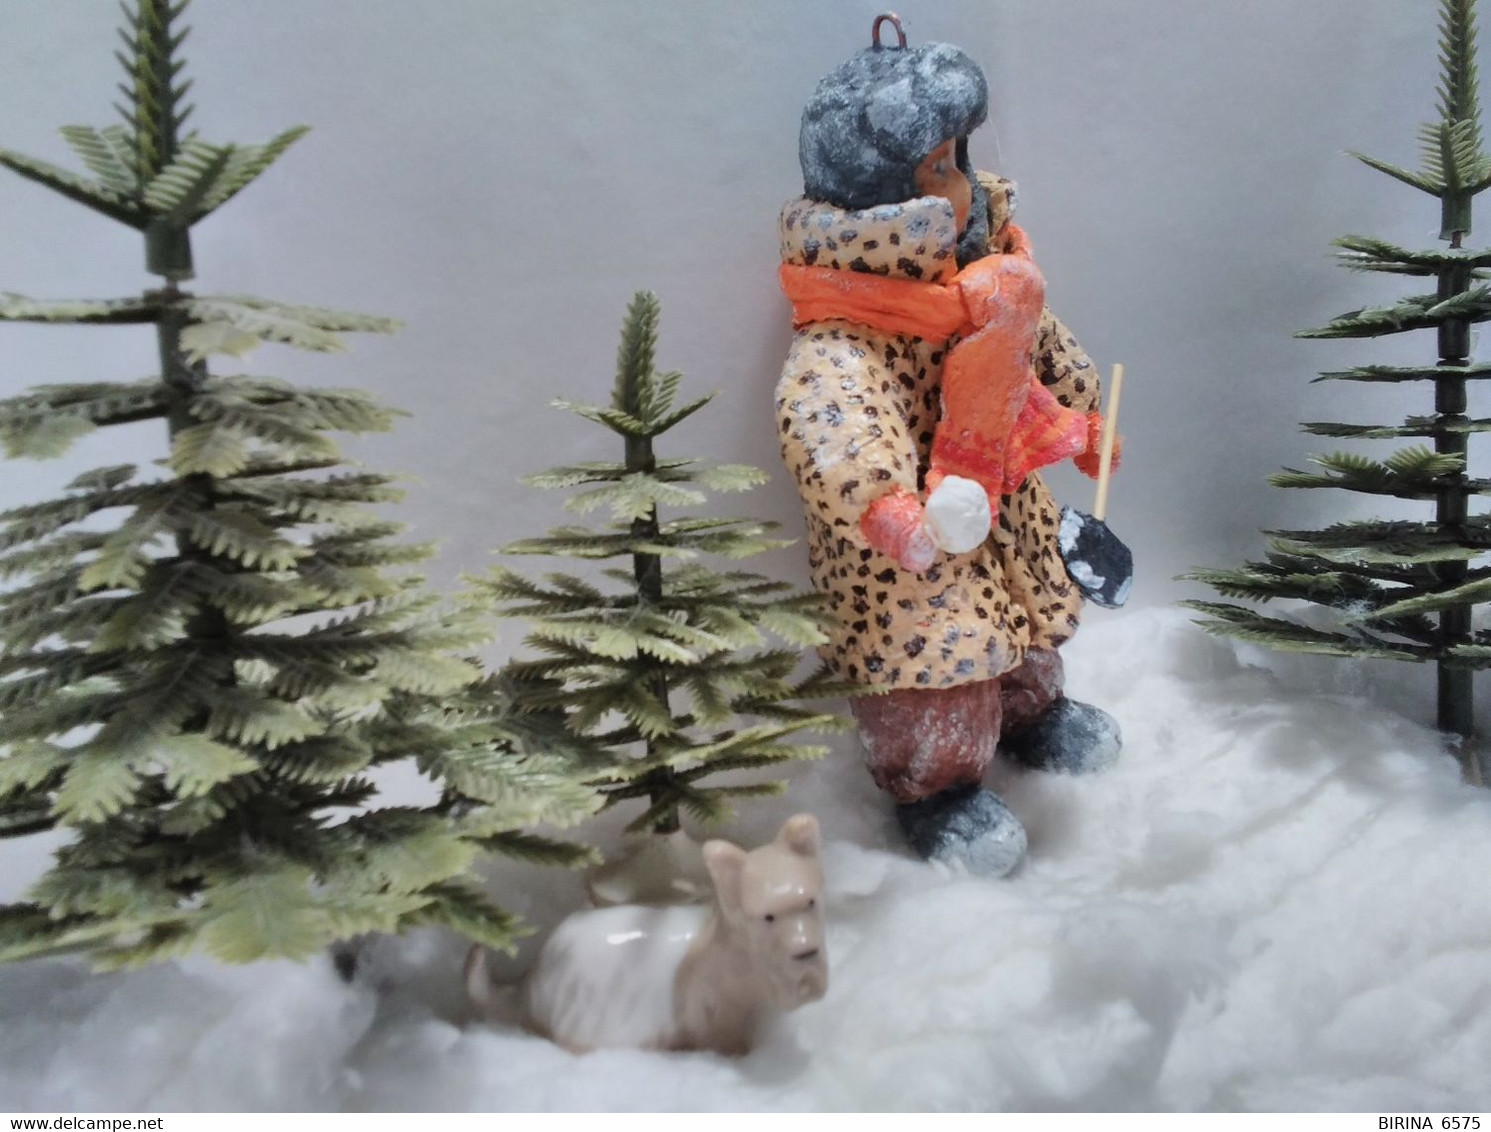 Christmas Tree Toy. Vanyusha On A Walk. From Cotton. 12 Cm. New Year. Christmas. Handmade. - Décoration De Noël